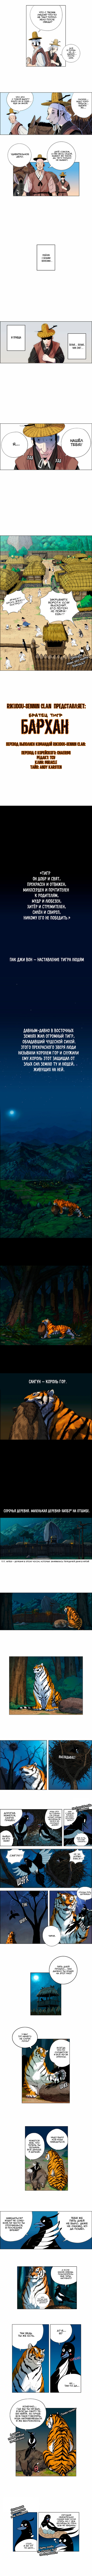 Братец тигр — Бархан 1 - 1 Сангун, король гор